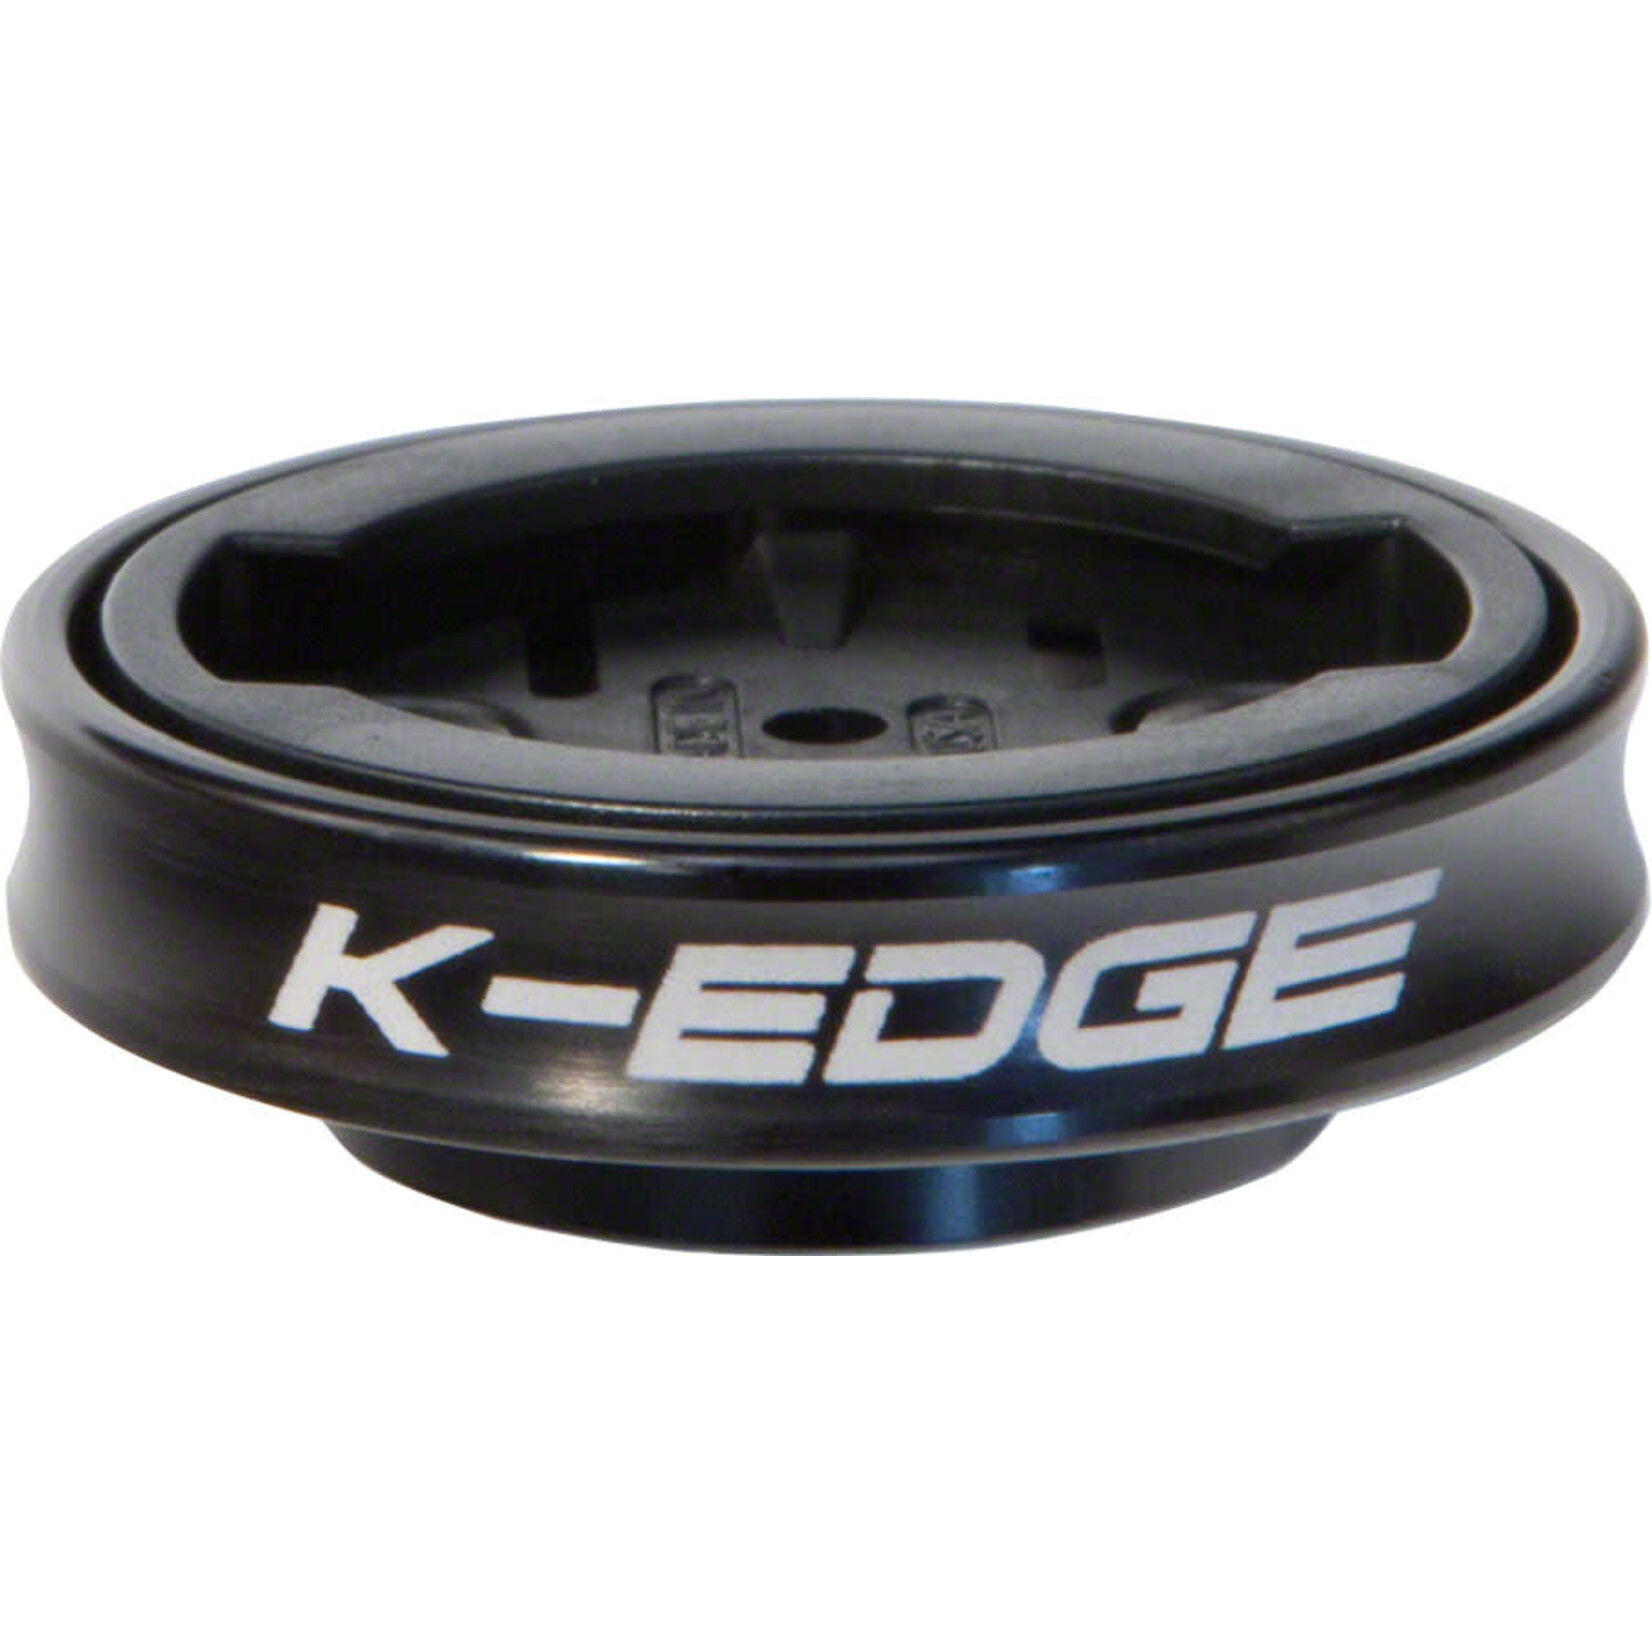 K-Edge K-EDGE Gravity Cap Stem Mount for Garmin Quarter Turn Type Computers, Black